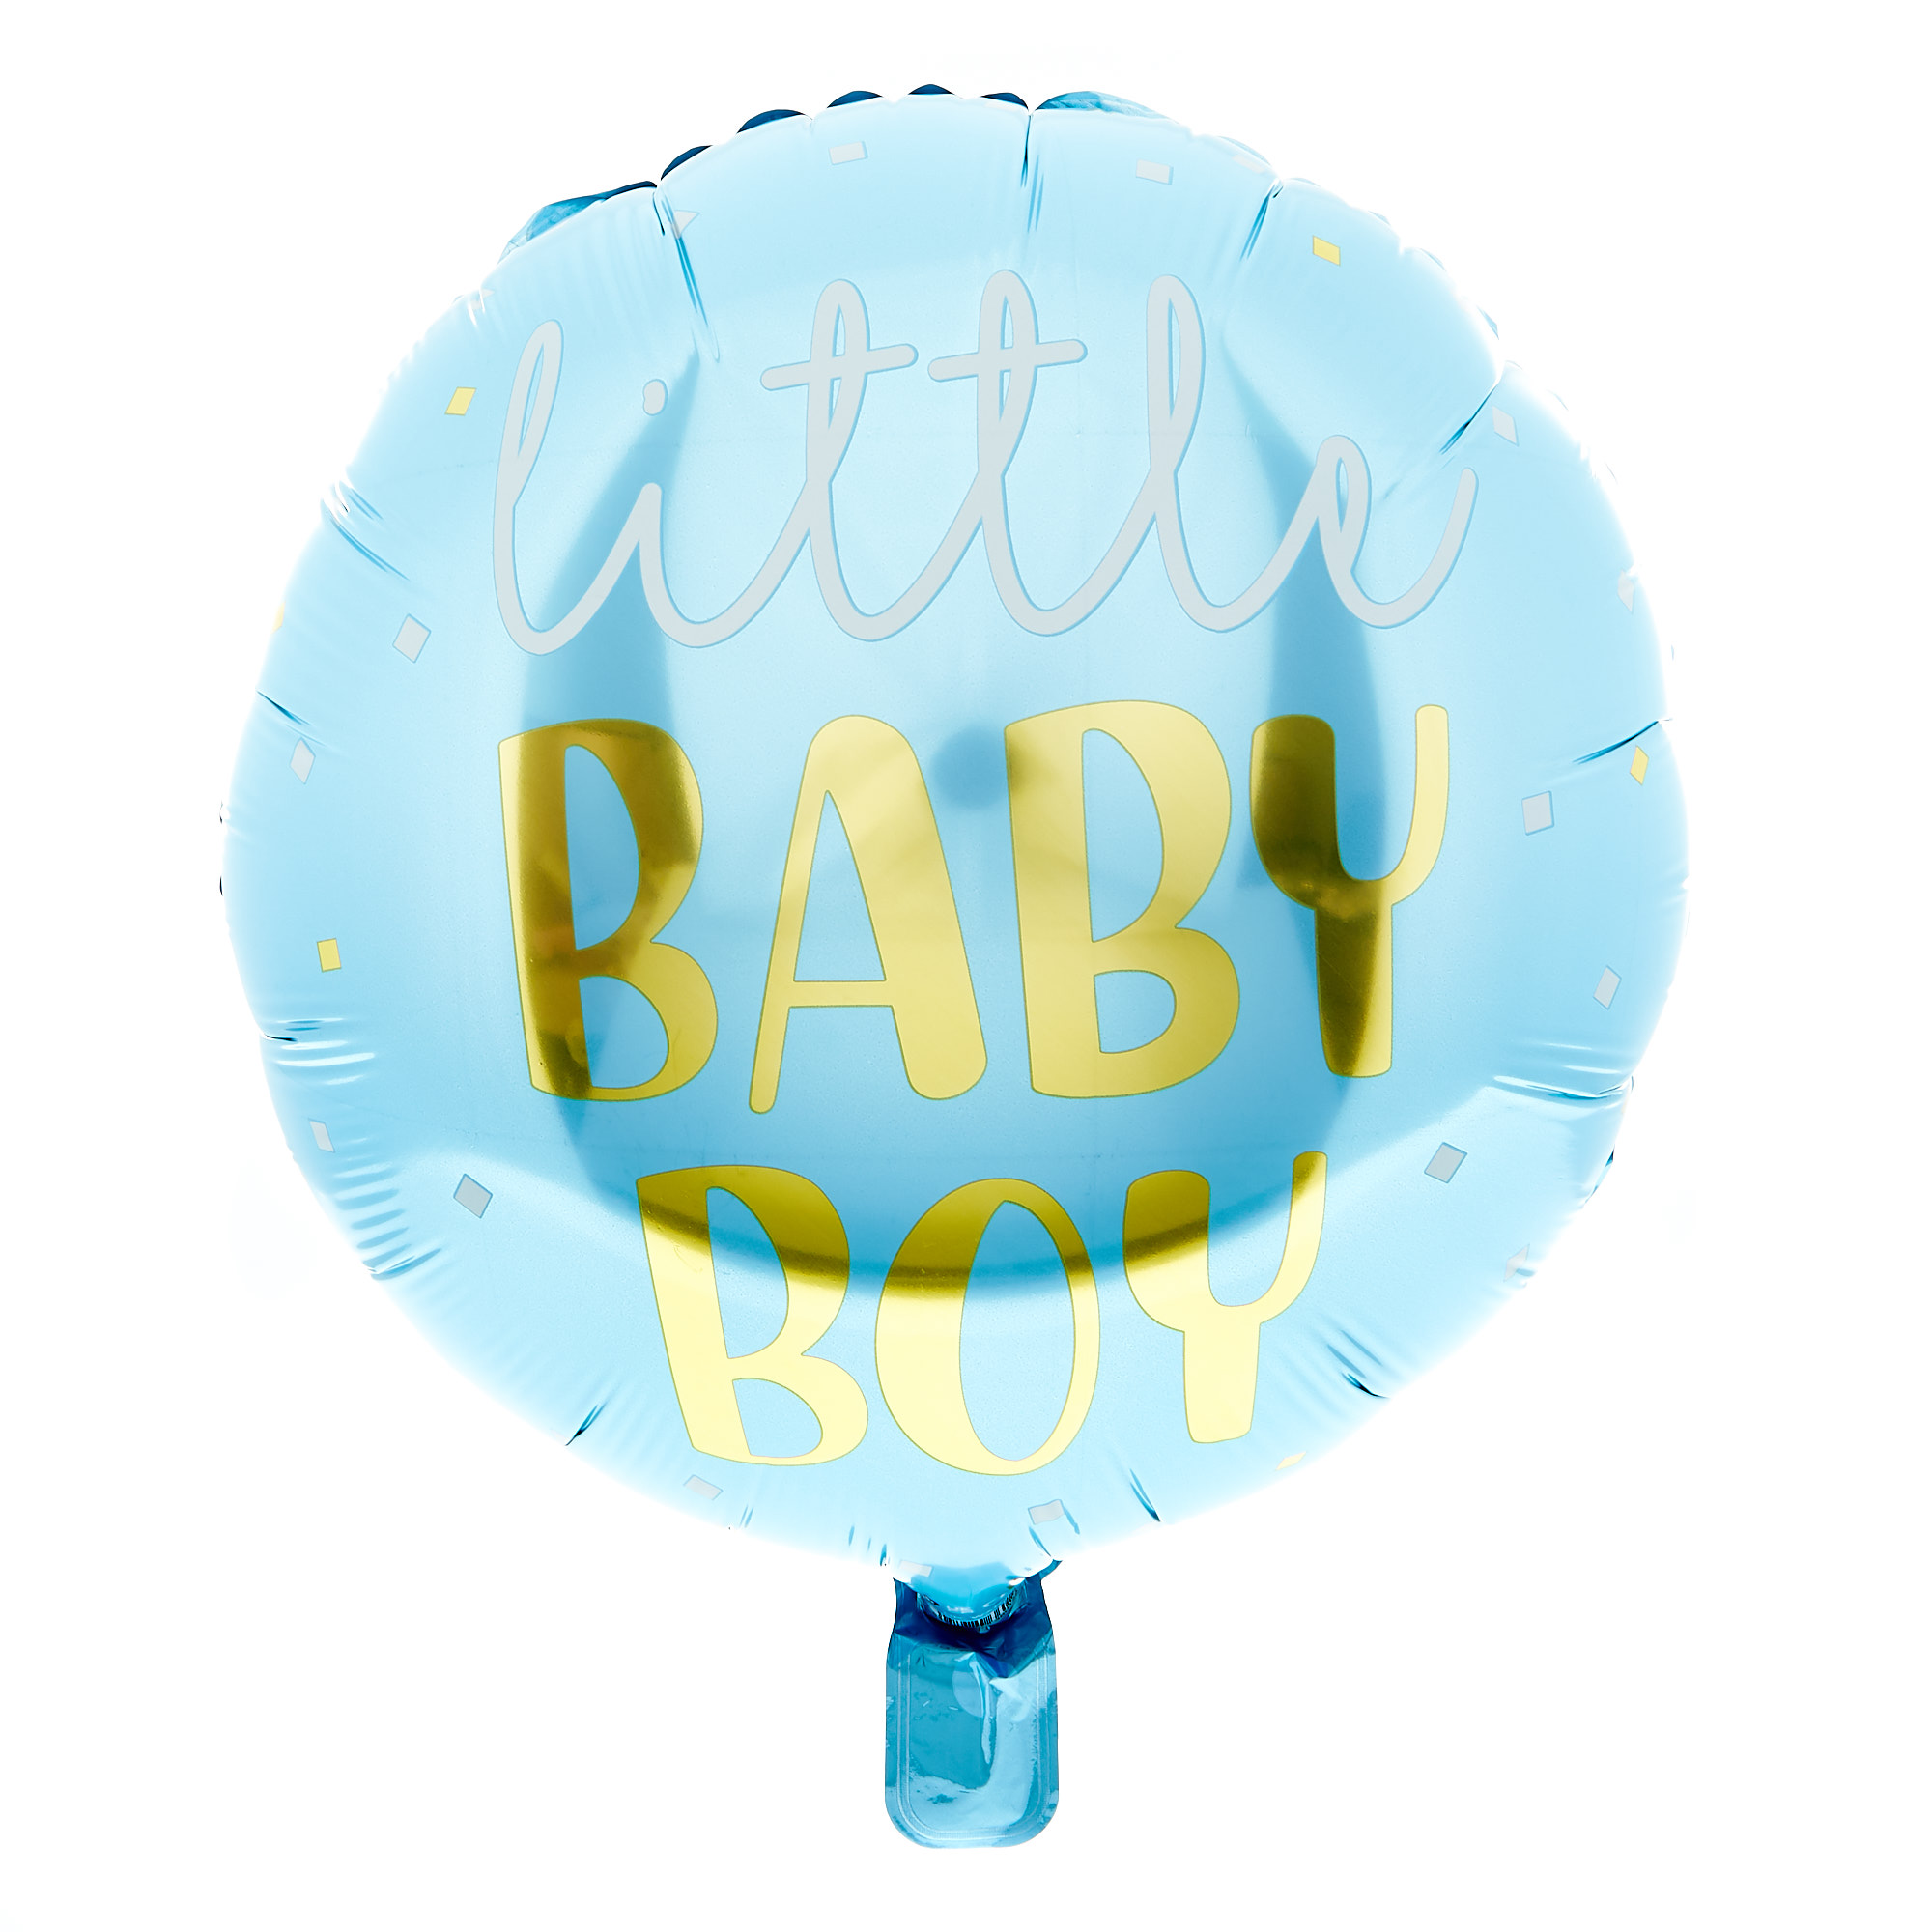 Hello Baby Boy Balloon & Lindt Chocolate Box - FREE GIFT CARD!